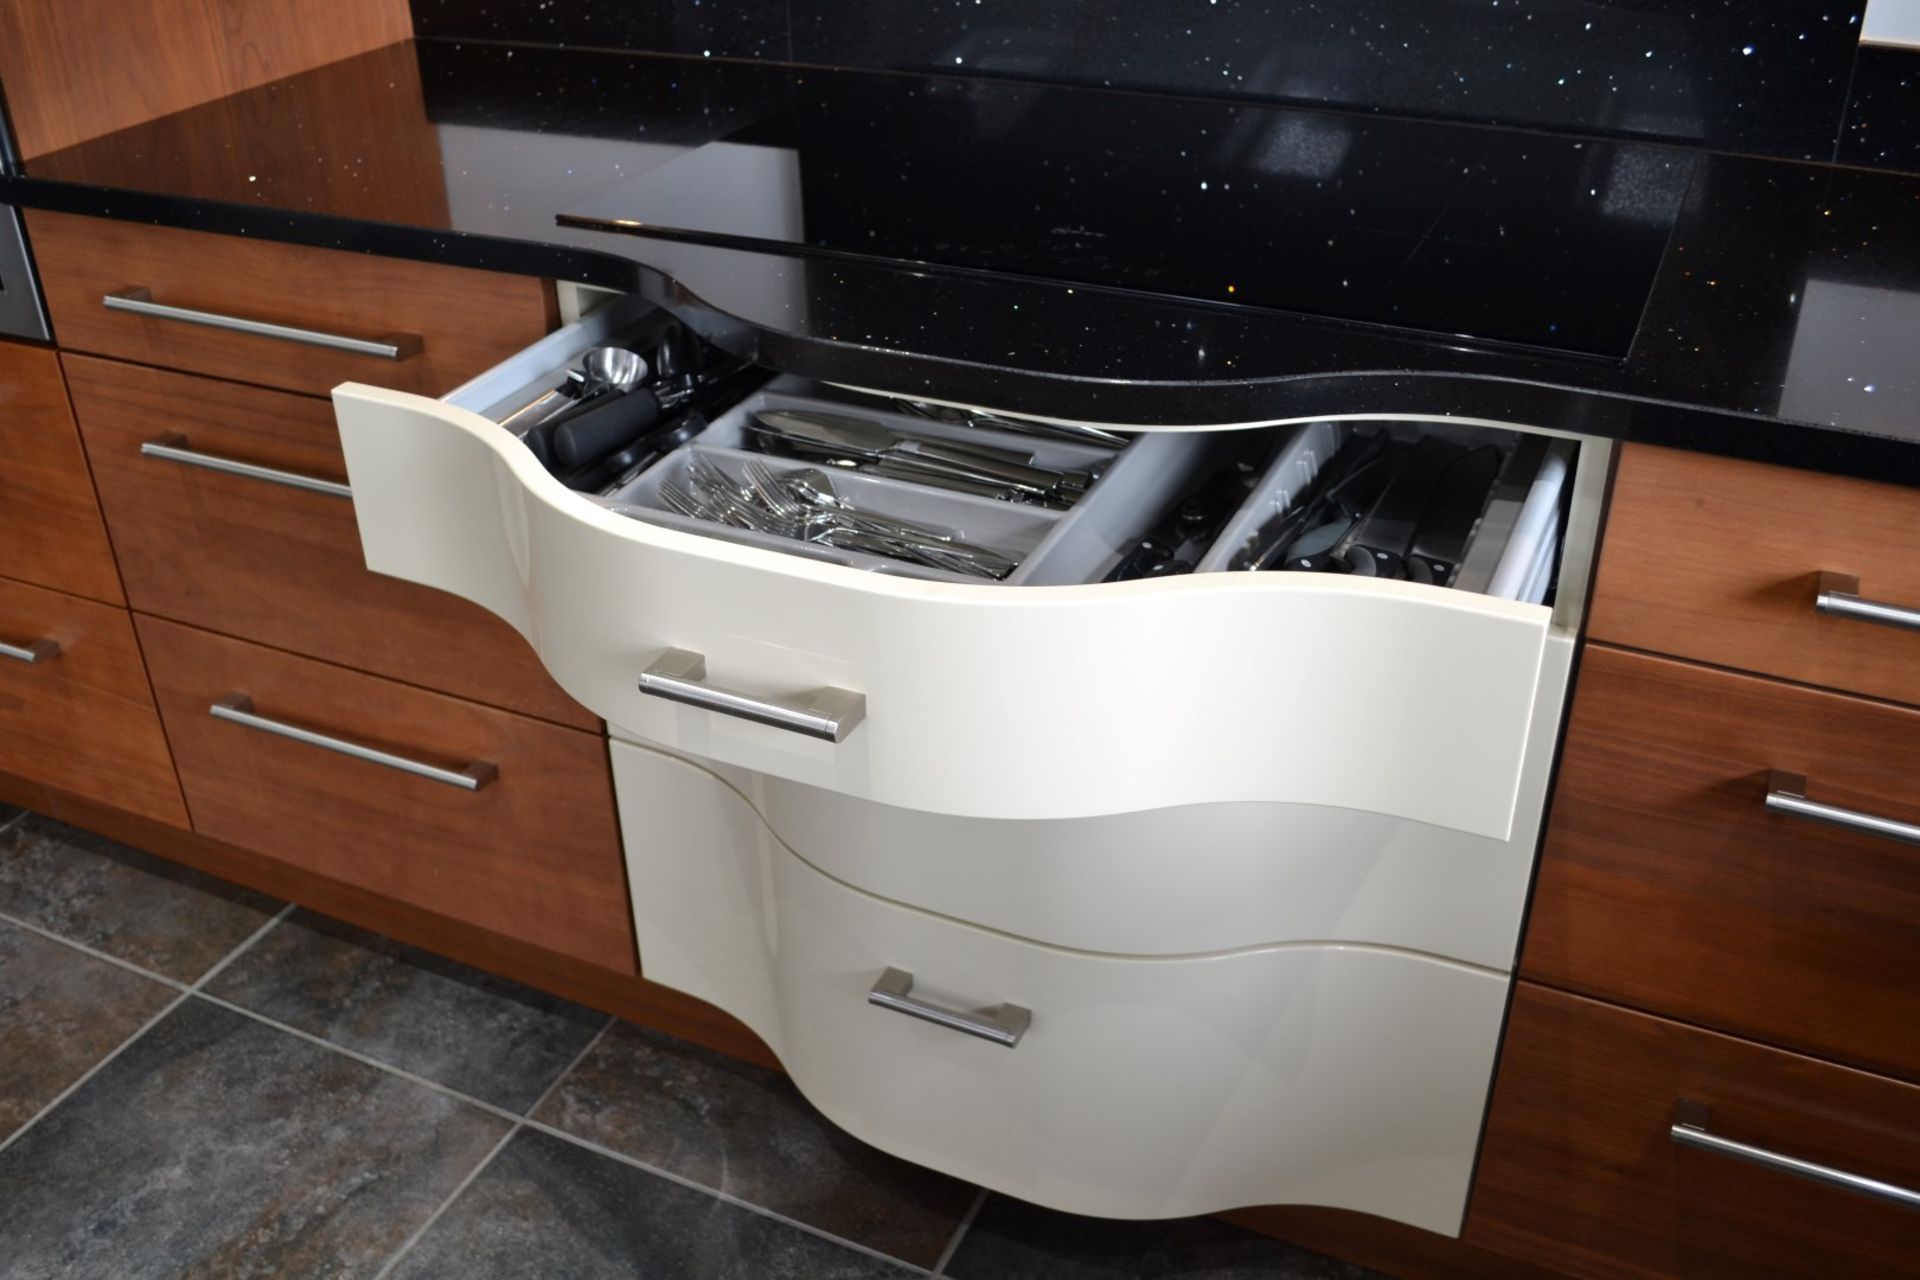 1 x Kitchen Design Bespoke Fitted Kitchen With Silestone Worktops & Neff Appliances - Superb - Image 31 of 59